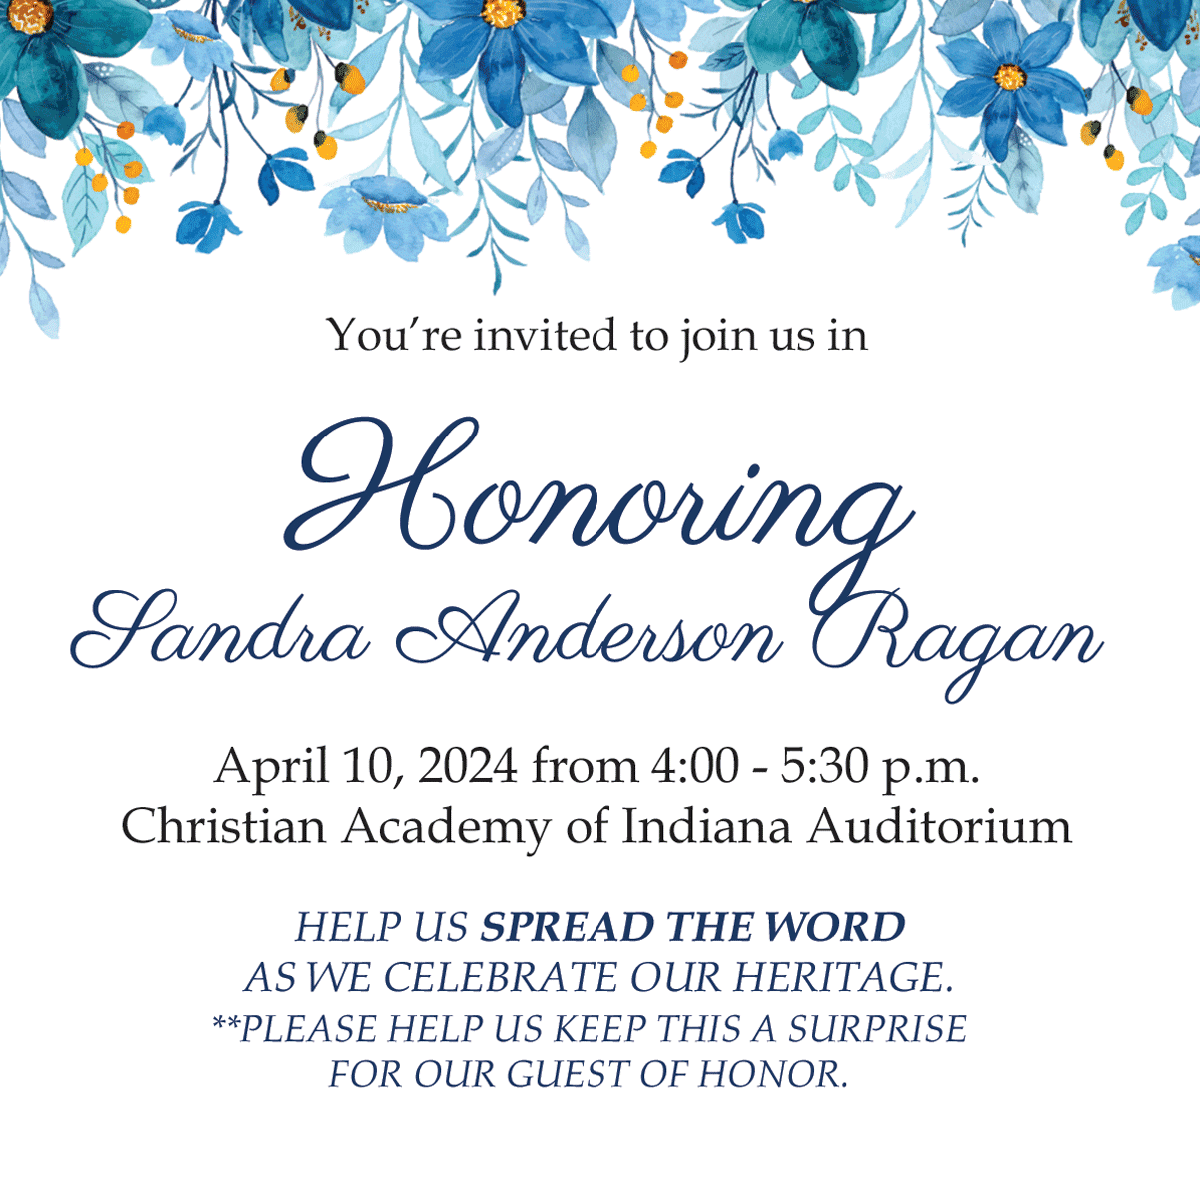 Christian Academy School System | Christian Academy of Indiana | Honoring Sandra Anderson Ragan | April 10